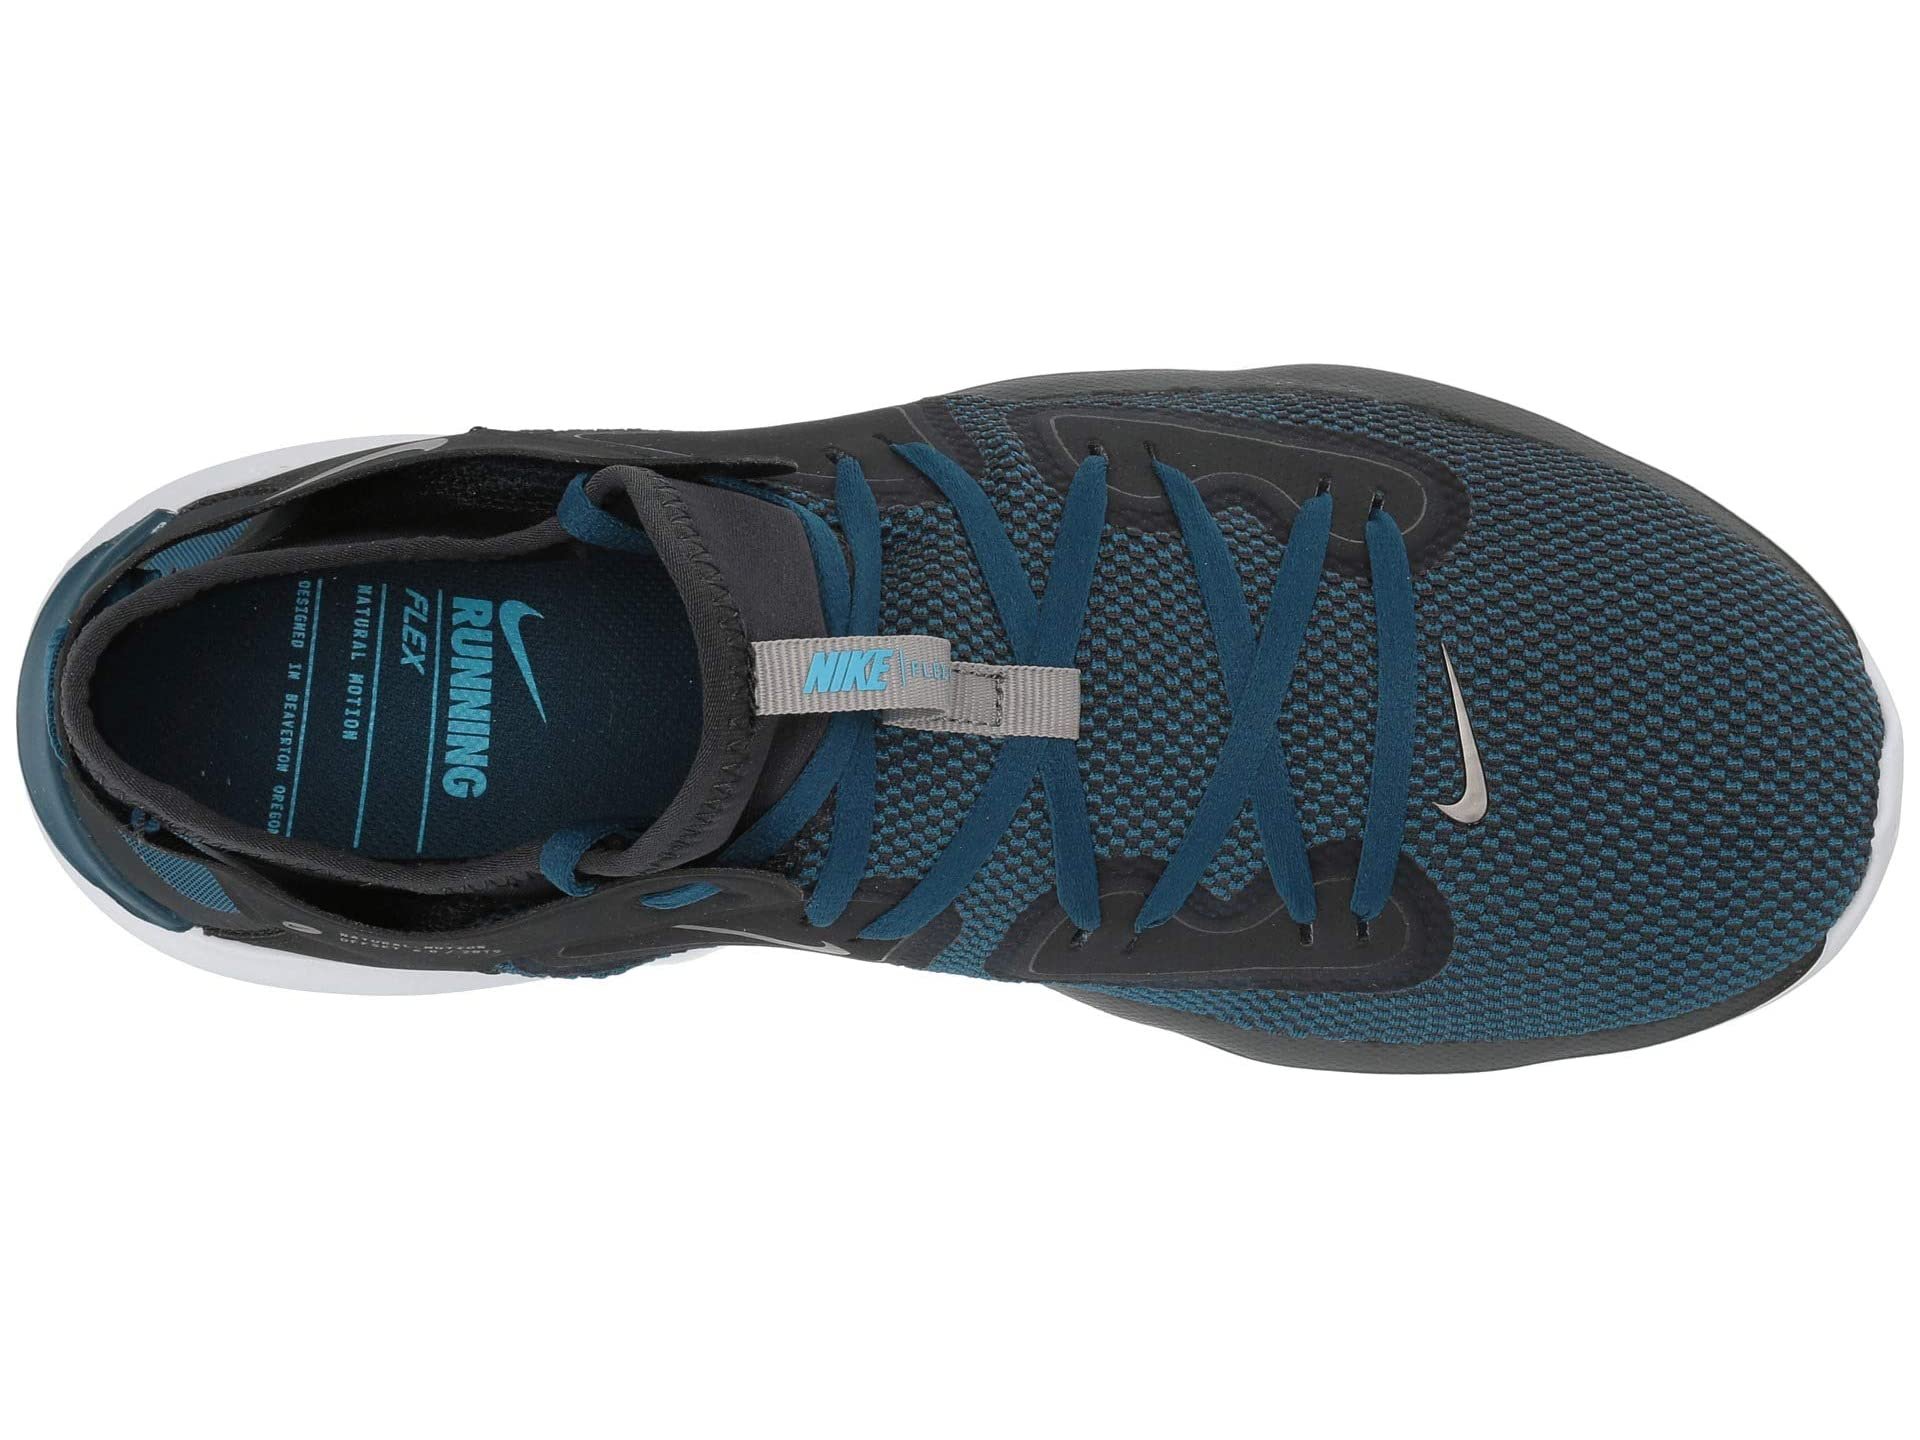 Nike Men's Flex 2019 RN Running Shoes - image 5 of 7